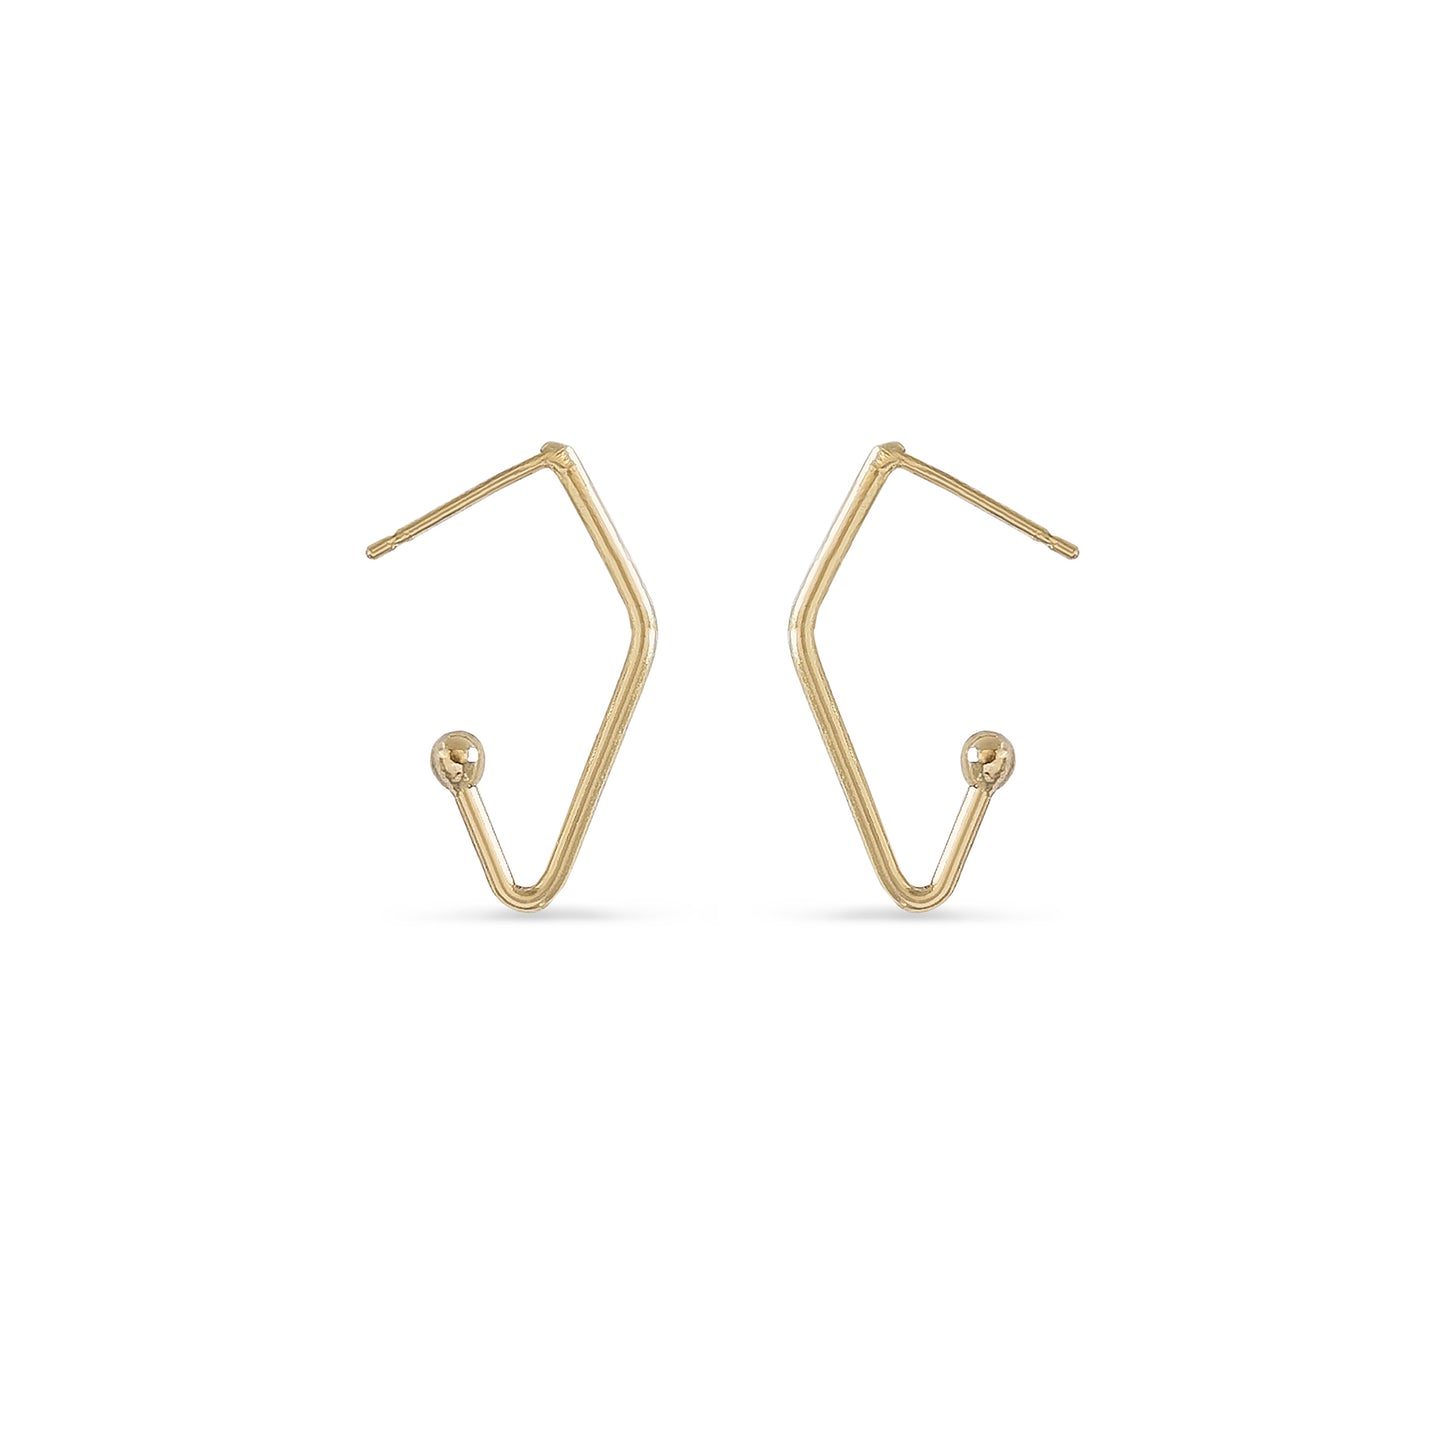 V-shaped charm hoop earrings in 14K gold